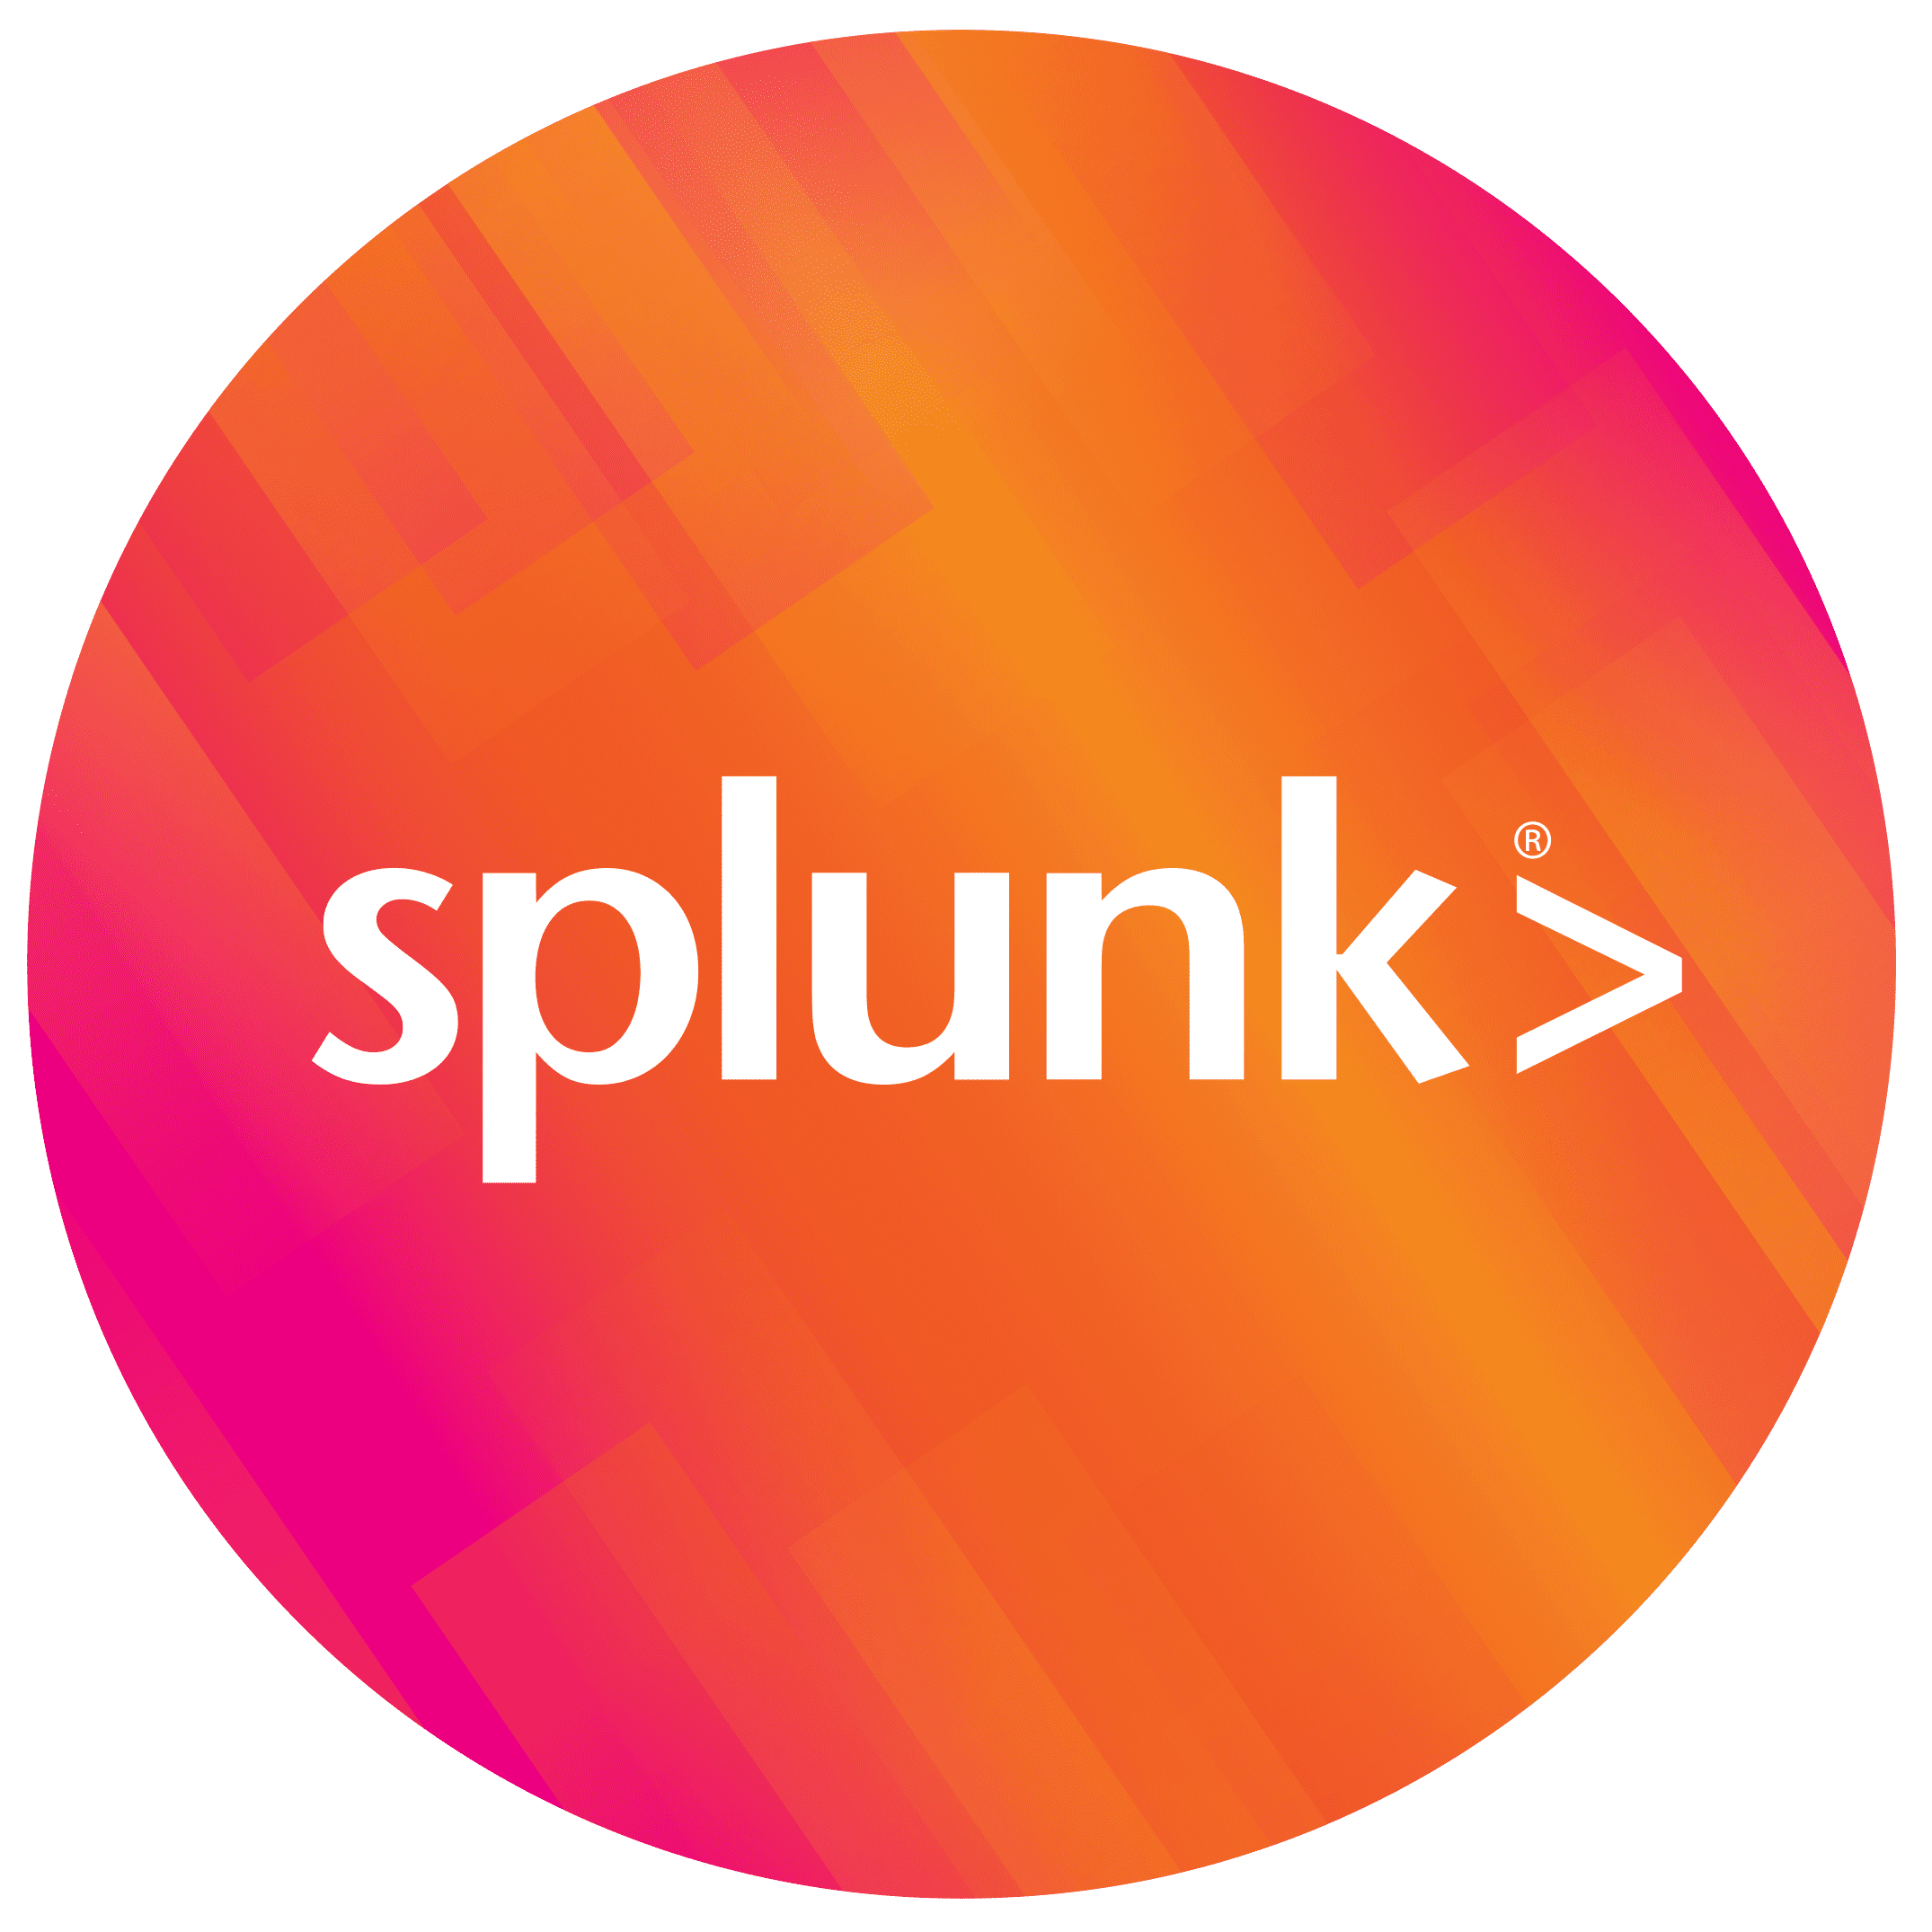 Splunk Infrastructure Monitoring logo